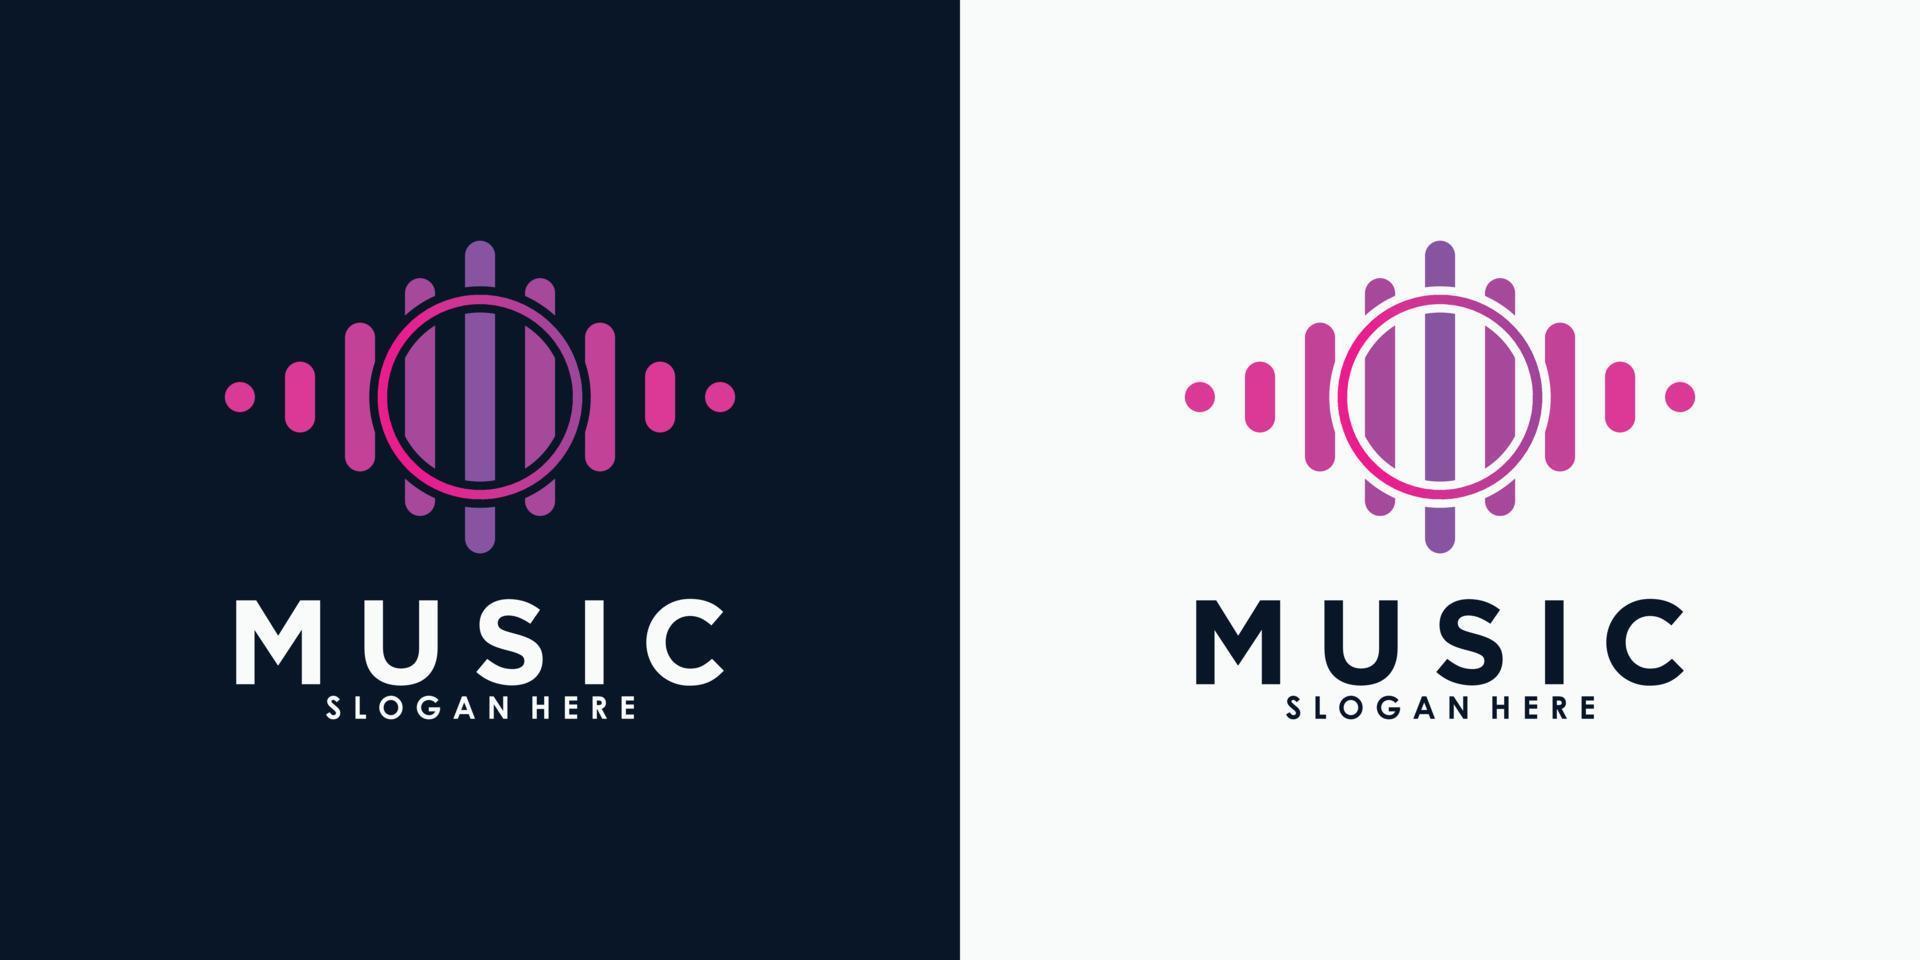 Musik-Logo-Design mit kreativem Konzept-Premium-Vektor vektor